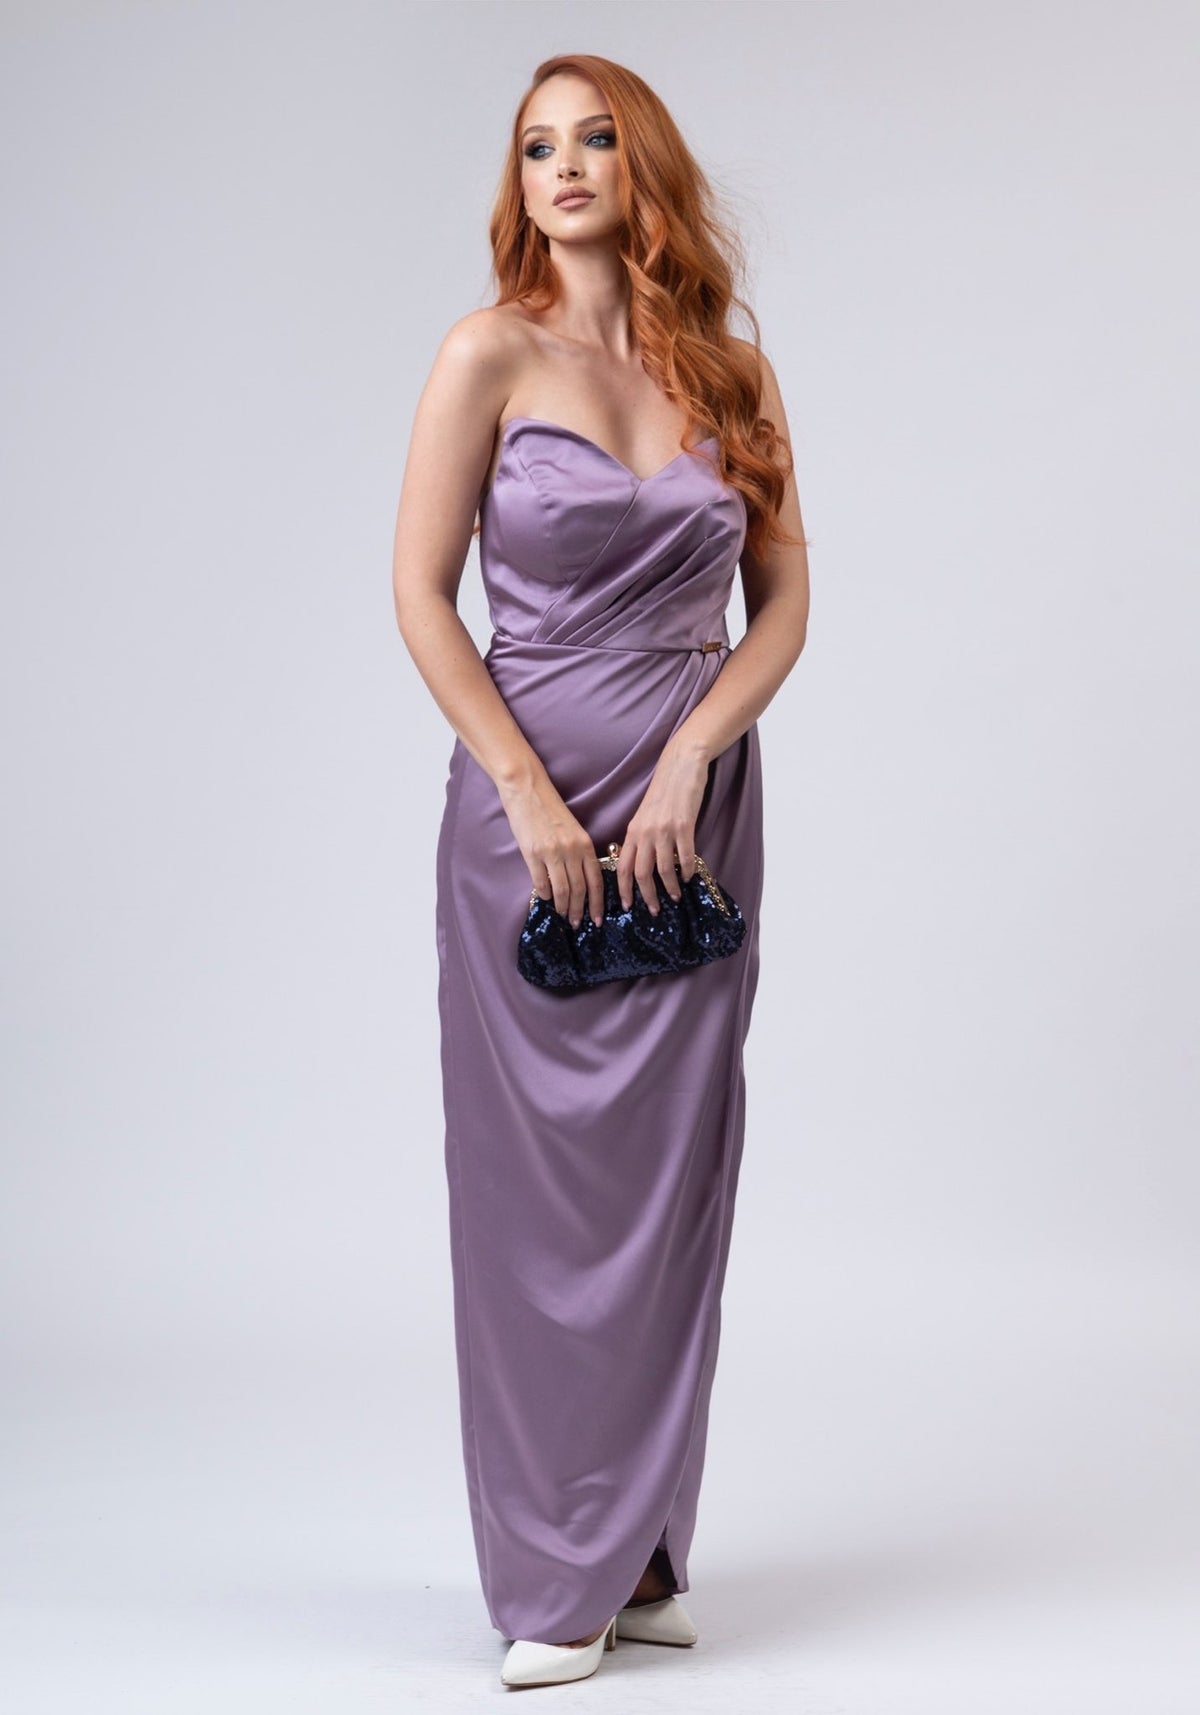 Long corseted violet dress